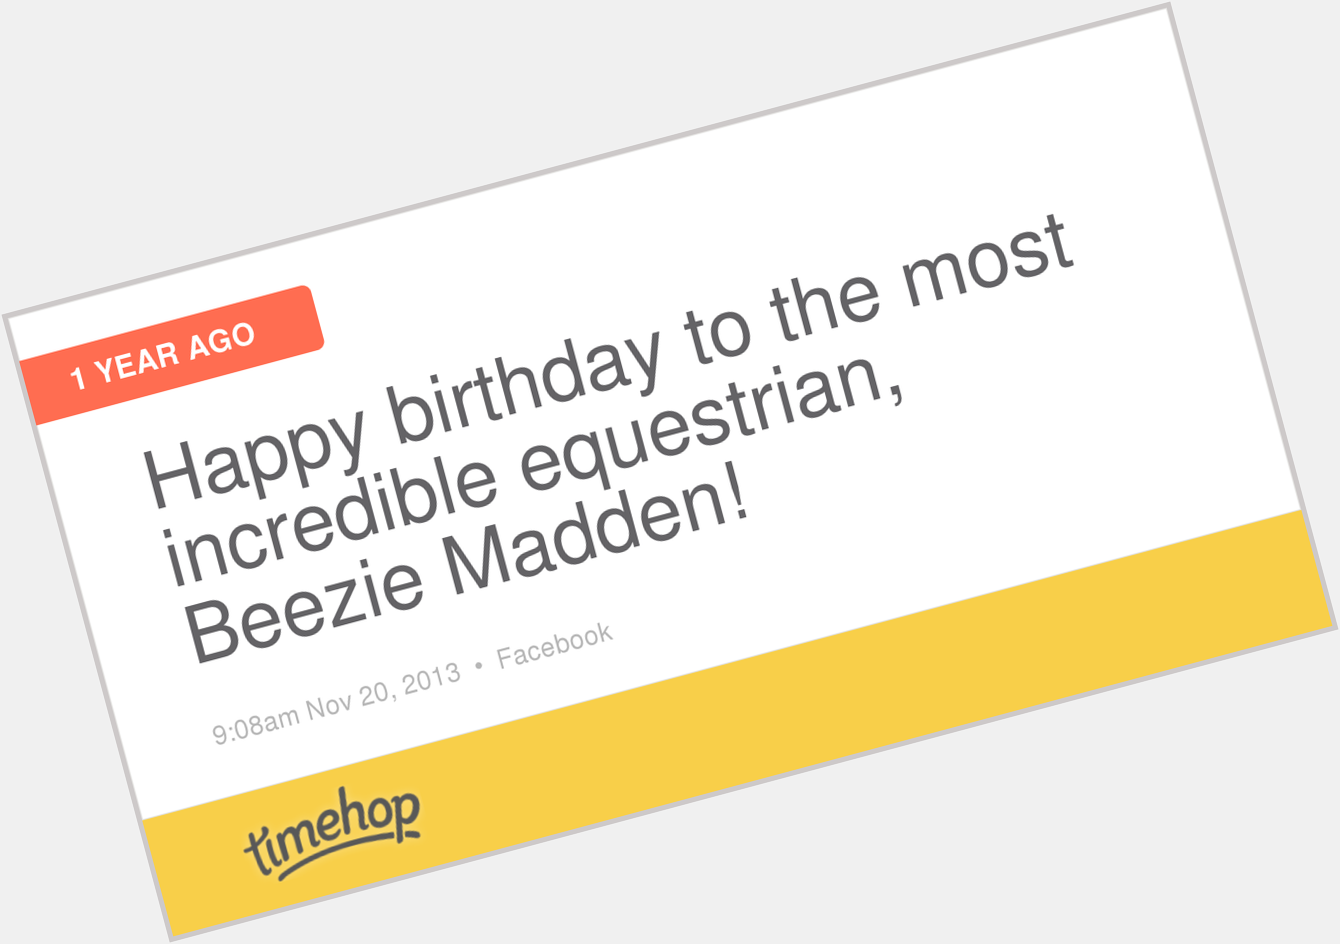 HAPPY BIRTHDAY BEEZIE MADDEN!   